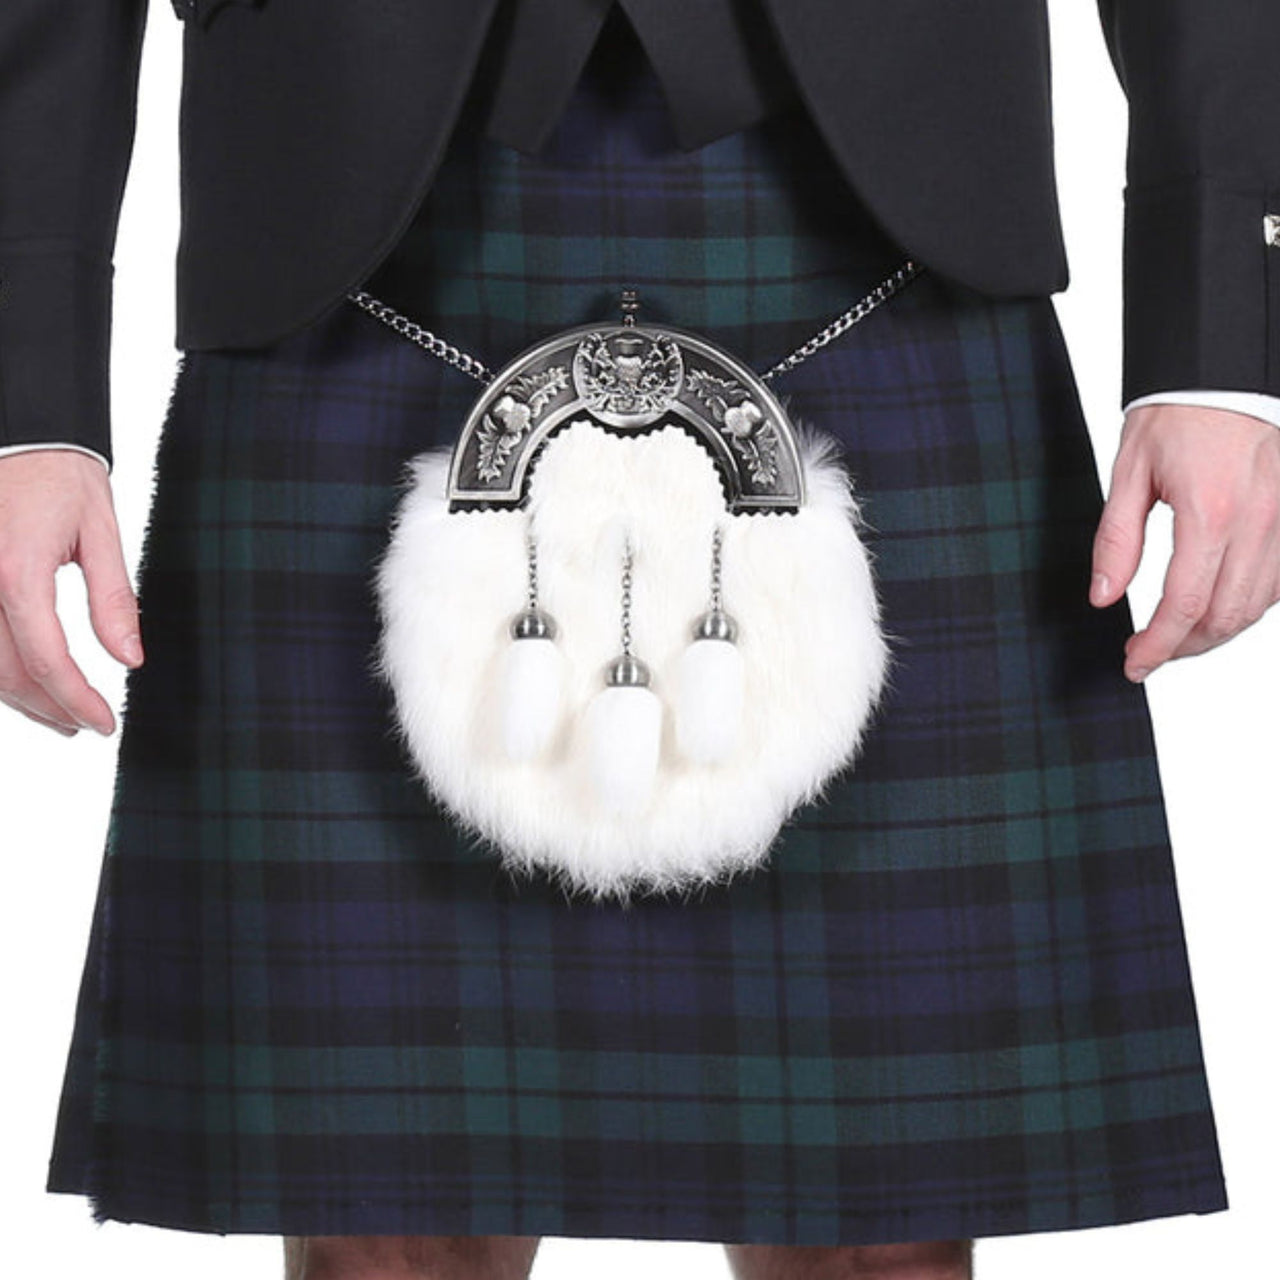 Black Watch 8 Yard Premium 16oz Scottish Men's Traditional Highland Dress Tartan Kilt Outfit Wedding Party Events